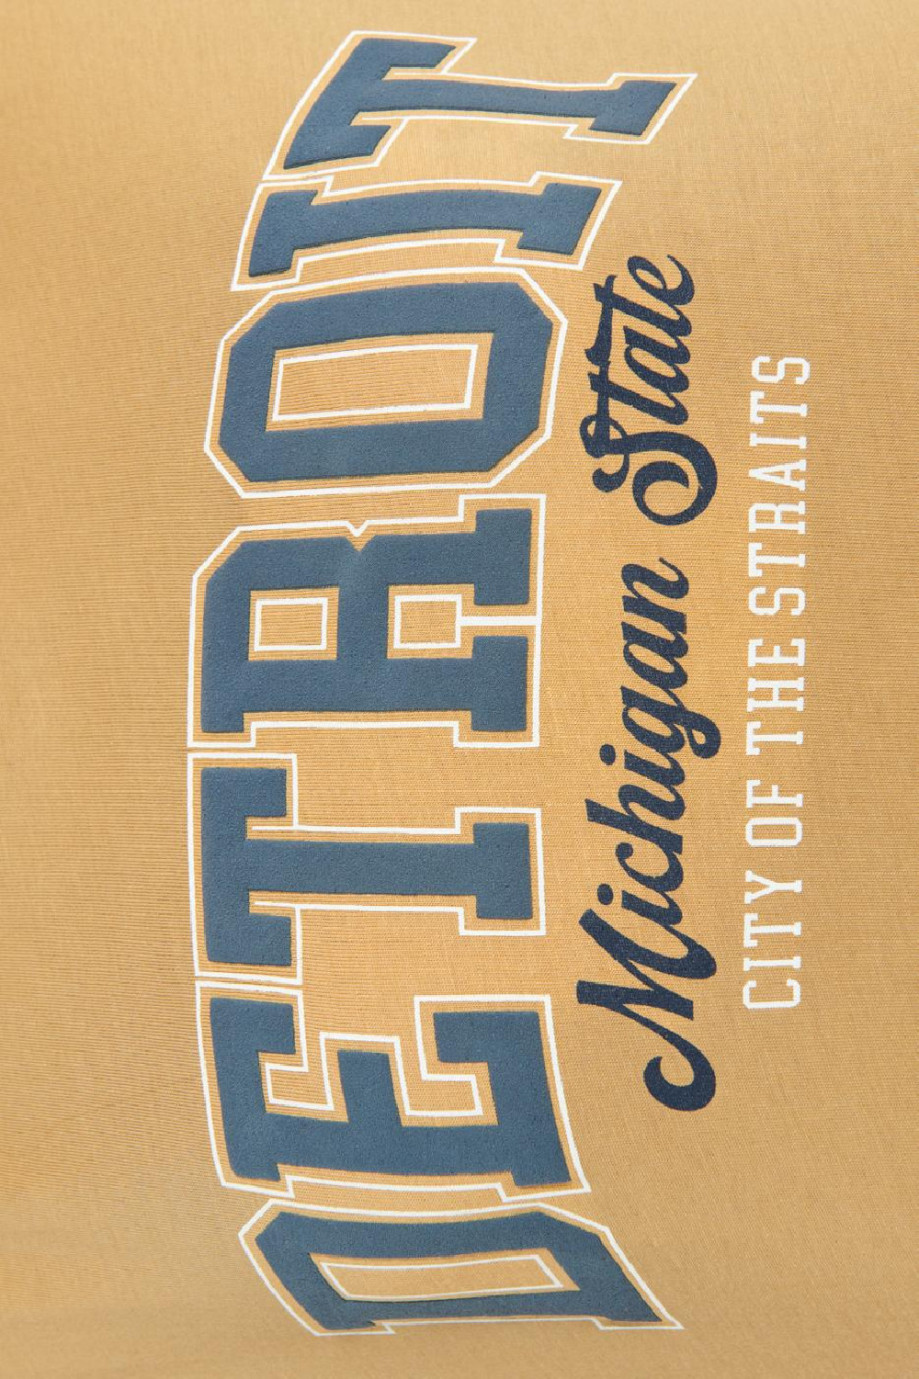 Camiseta kaky clara con diseño college azul de Detroit y manga corta